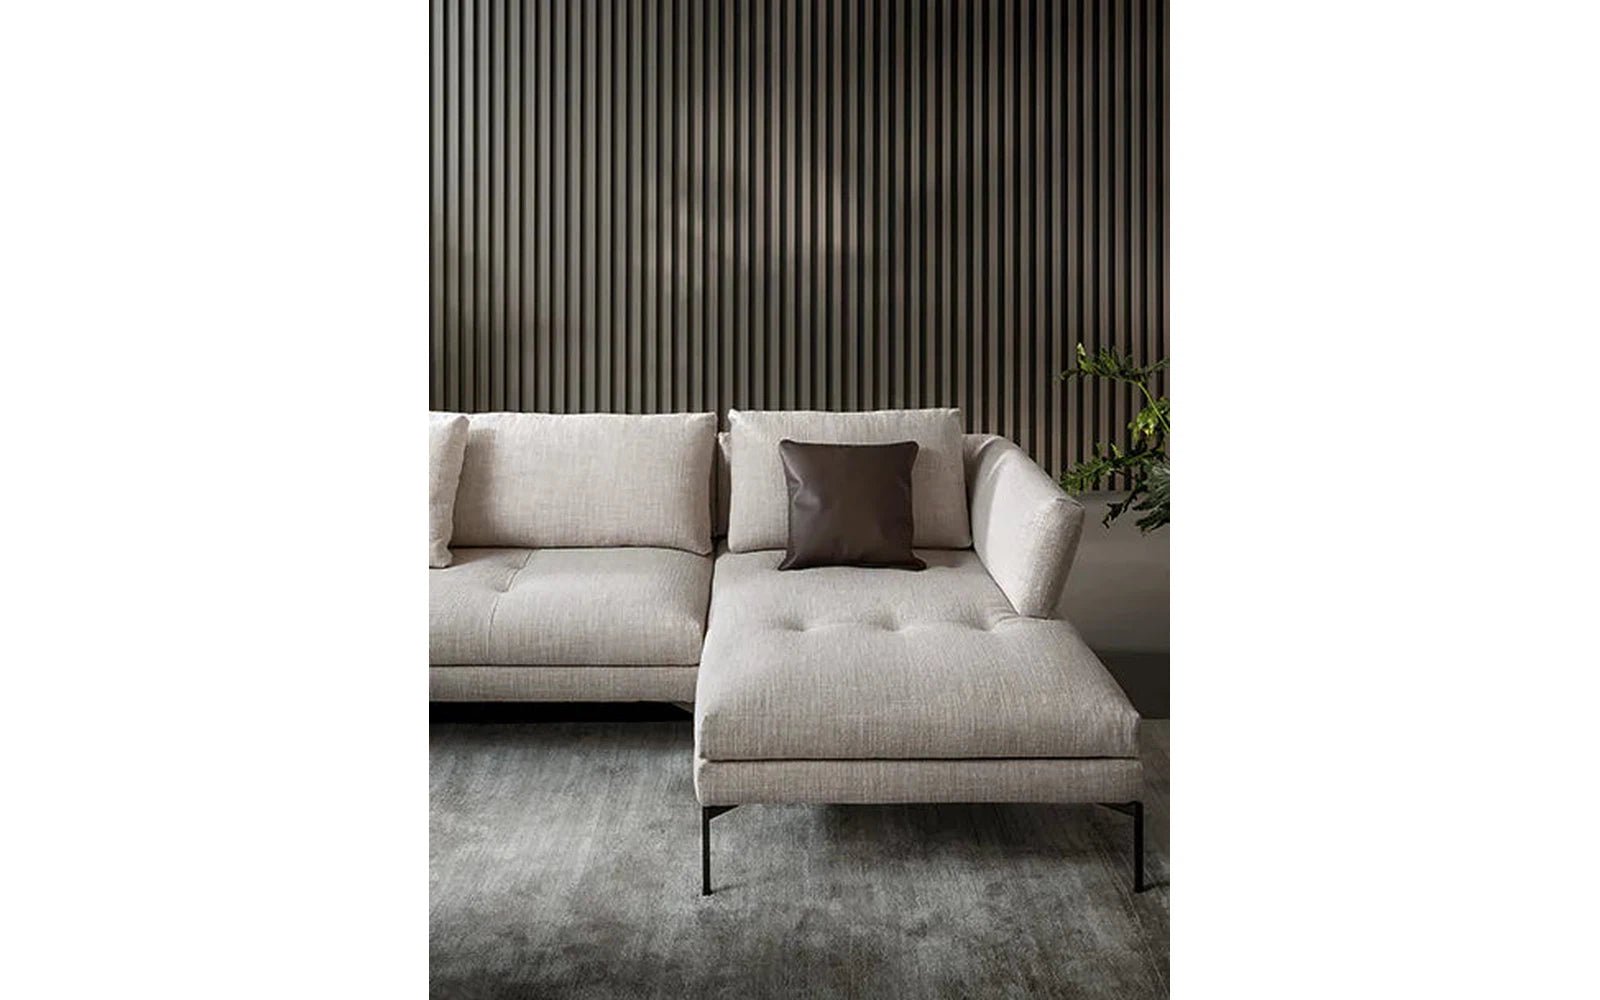 Aliante Sectional Set Sofa